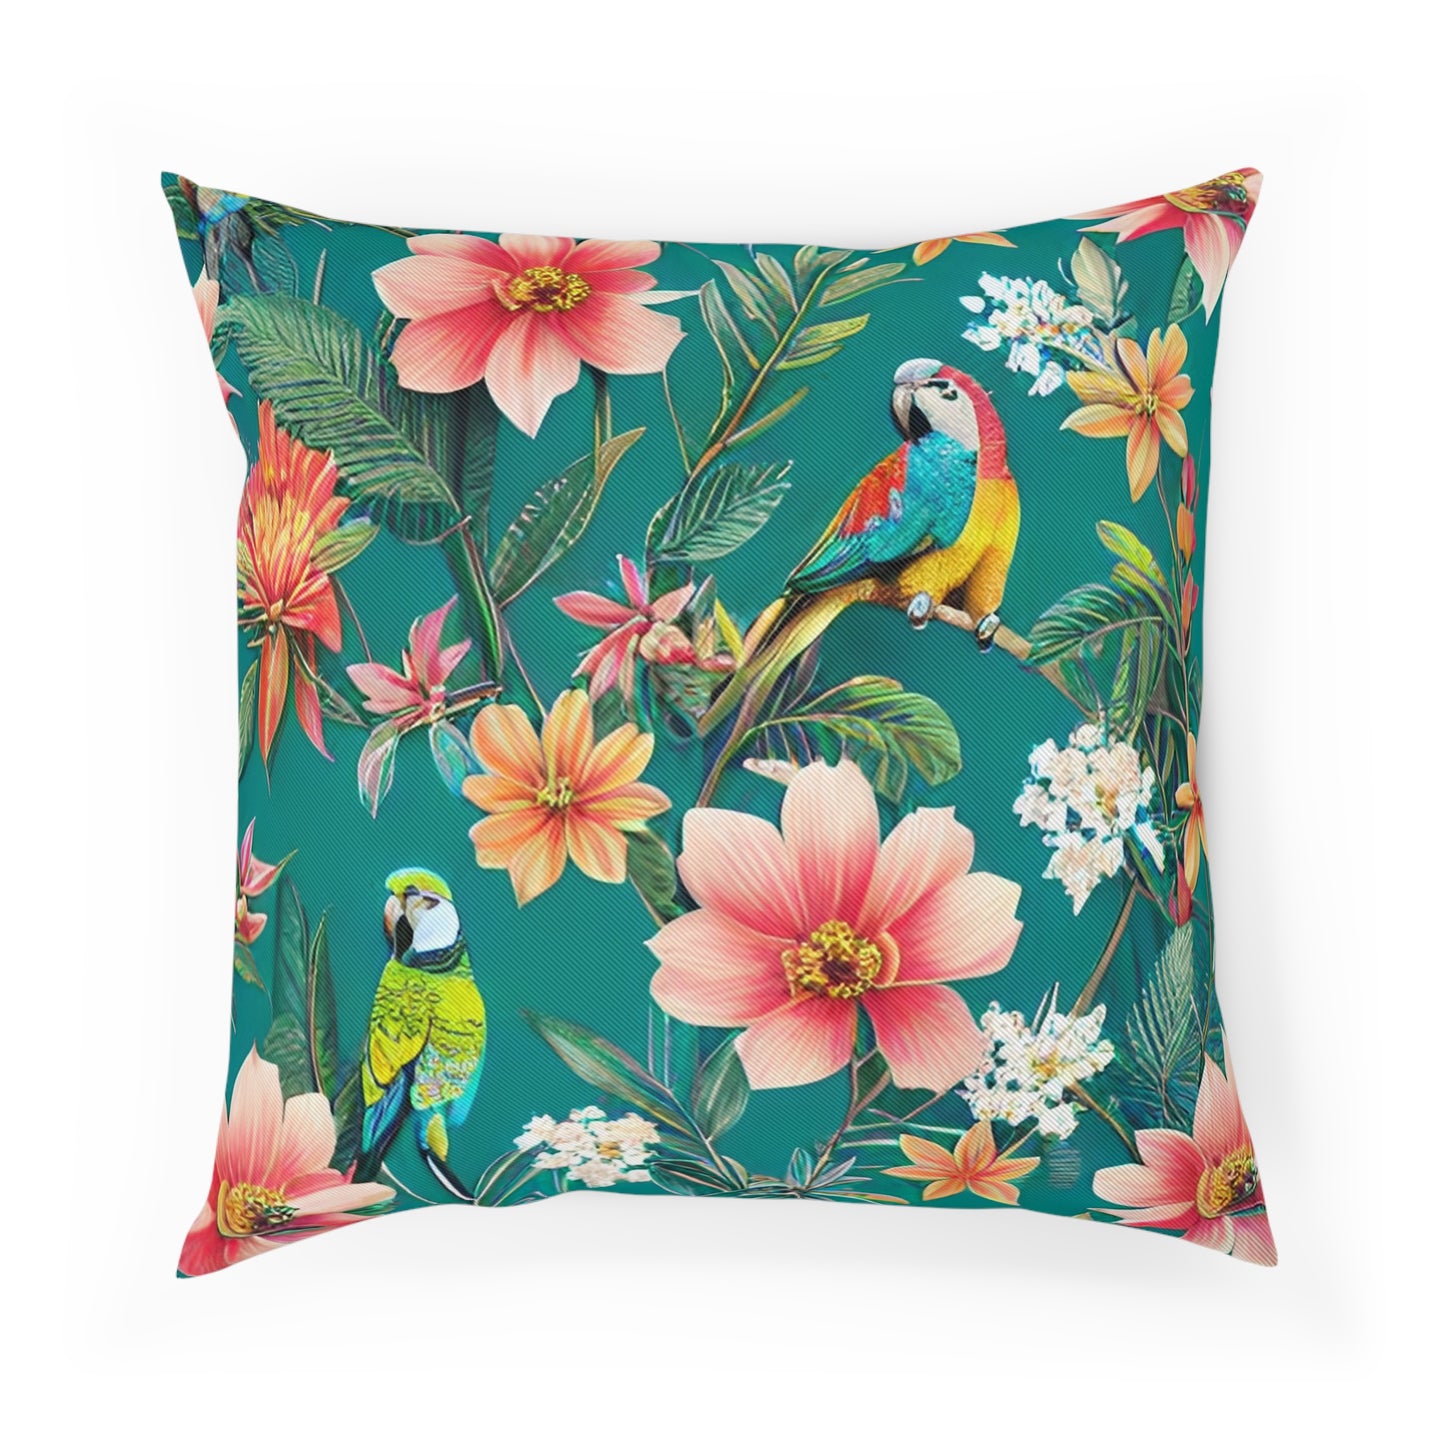 Vintage Maximalist Tropical Botanical Floral Birds Cushion 100% Cotton Throw Pillow Cover